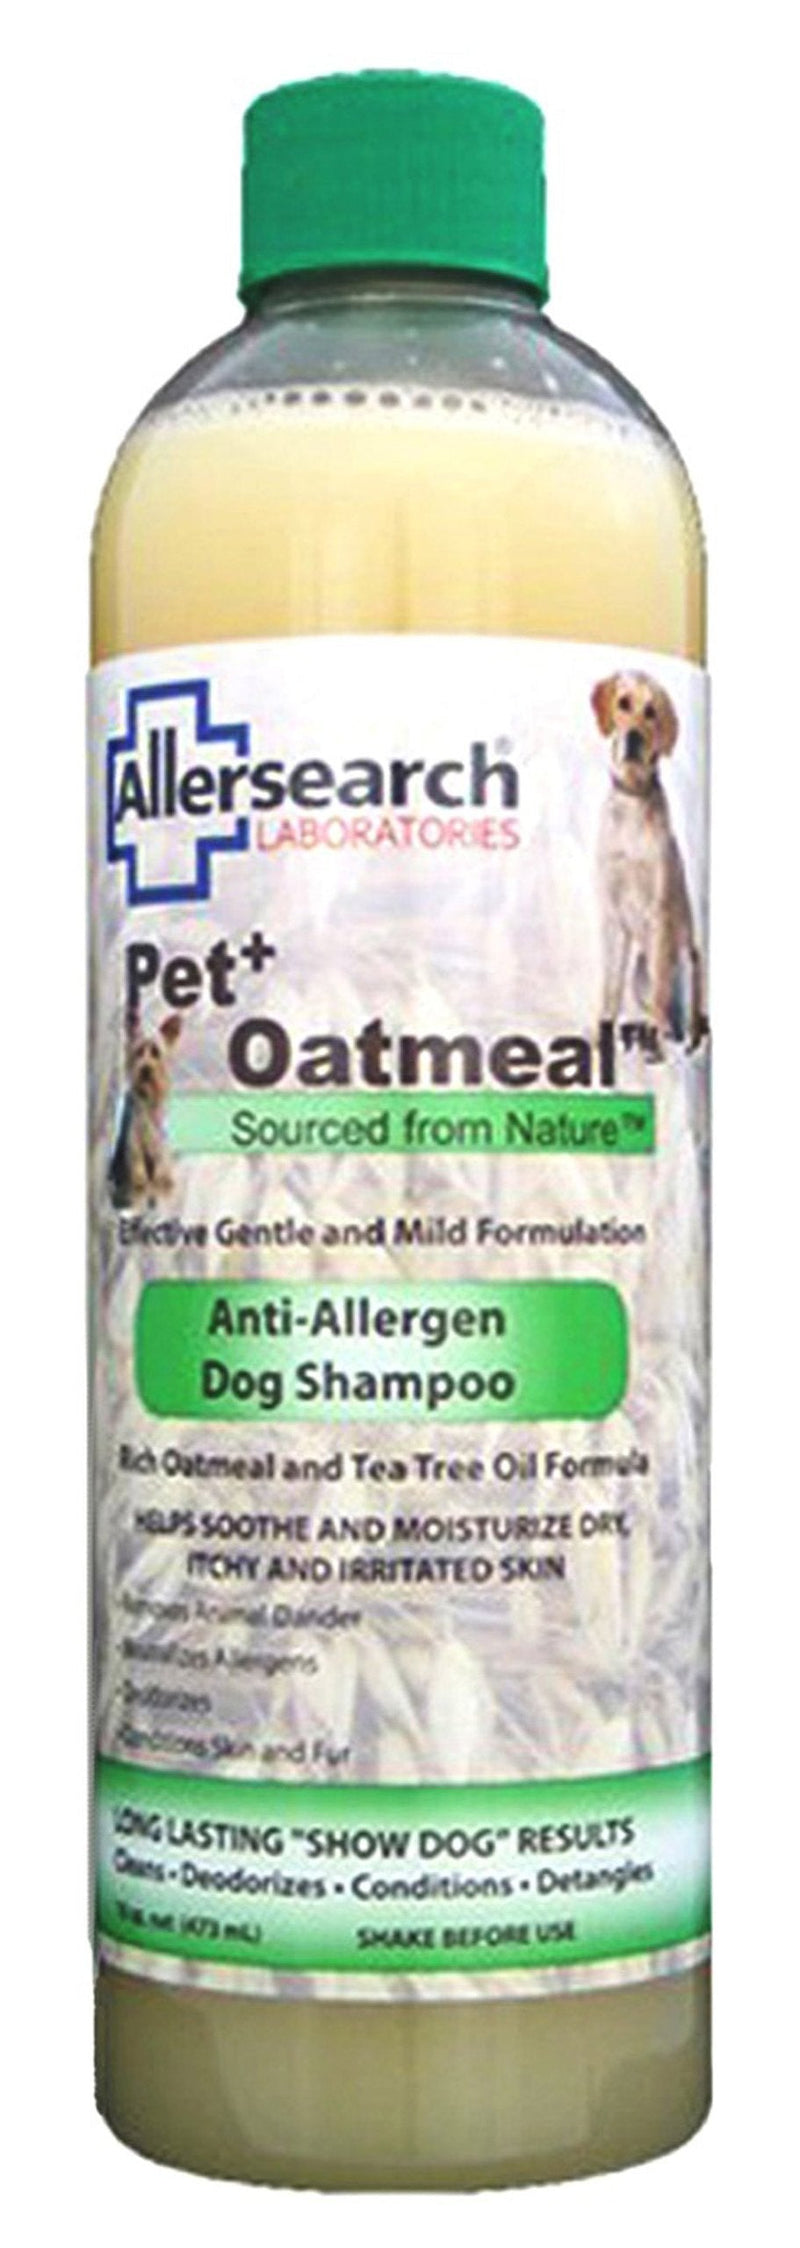 [Australia] - Allersearch Laboratories Pet Plus Oatmeal Anti-Allergen Dog Shampoo 16 Ounce 